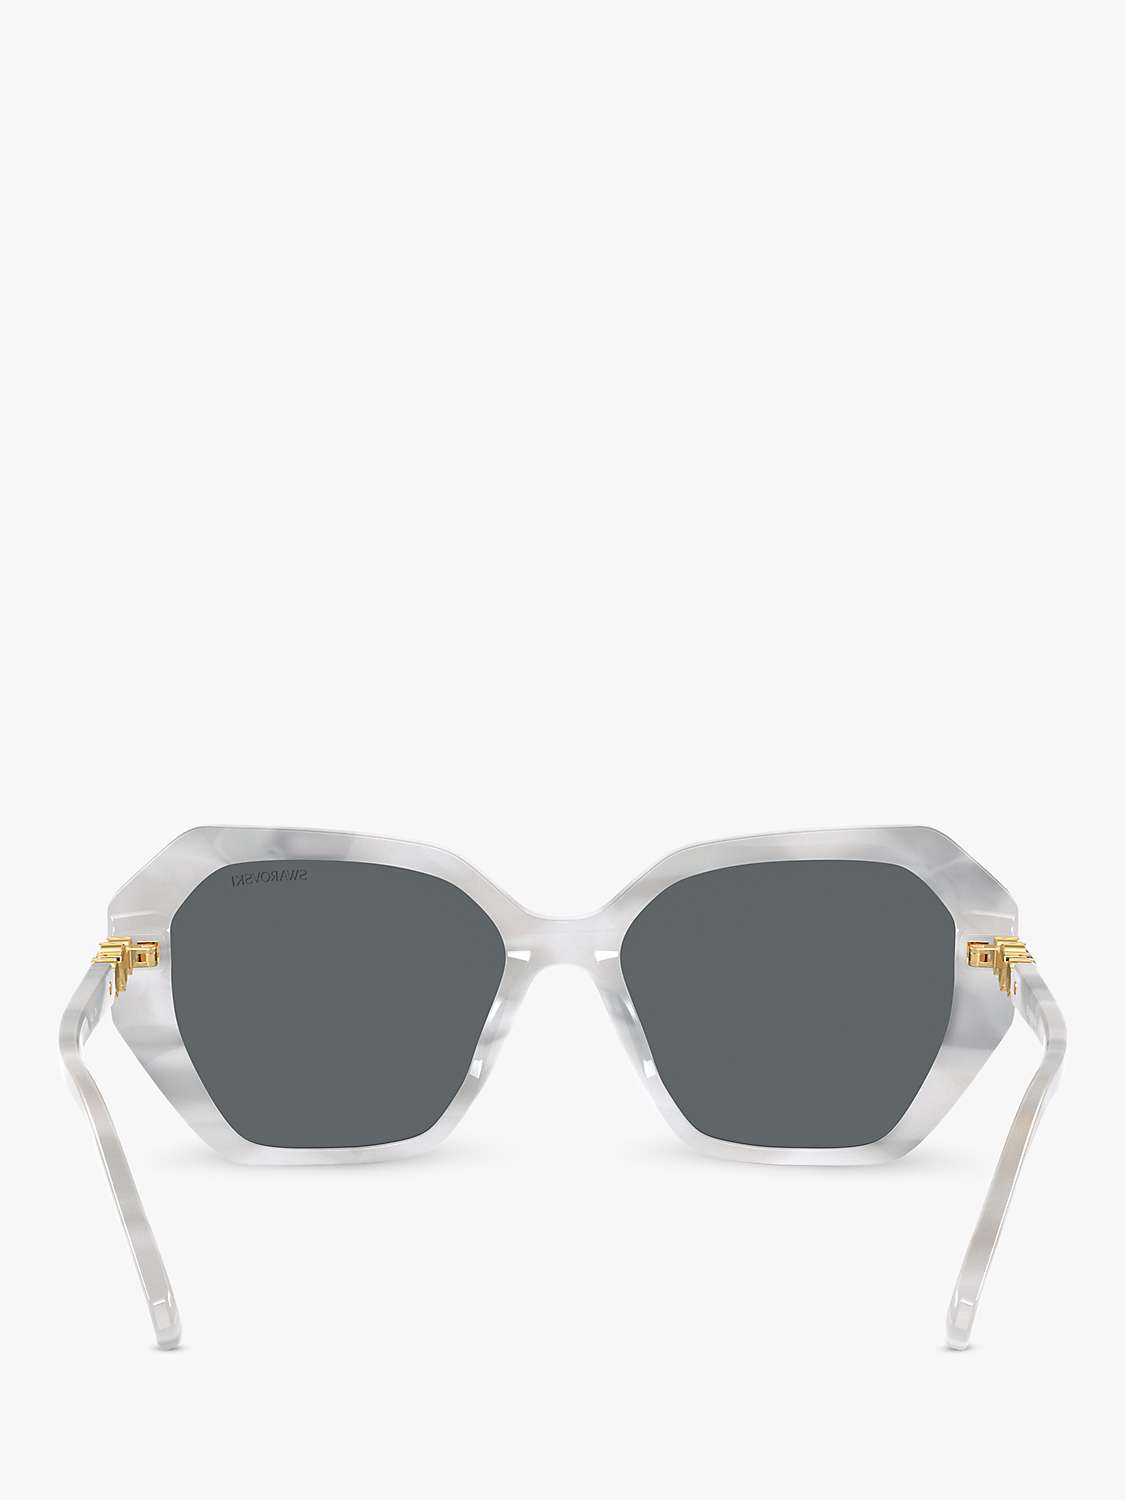 Buy Swarovski SK6017 Women's Butterfly Sunglasses, White Marble/Grey Online at johnlewis.com